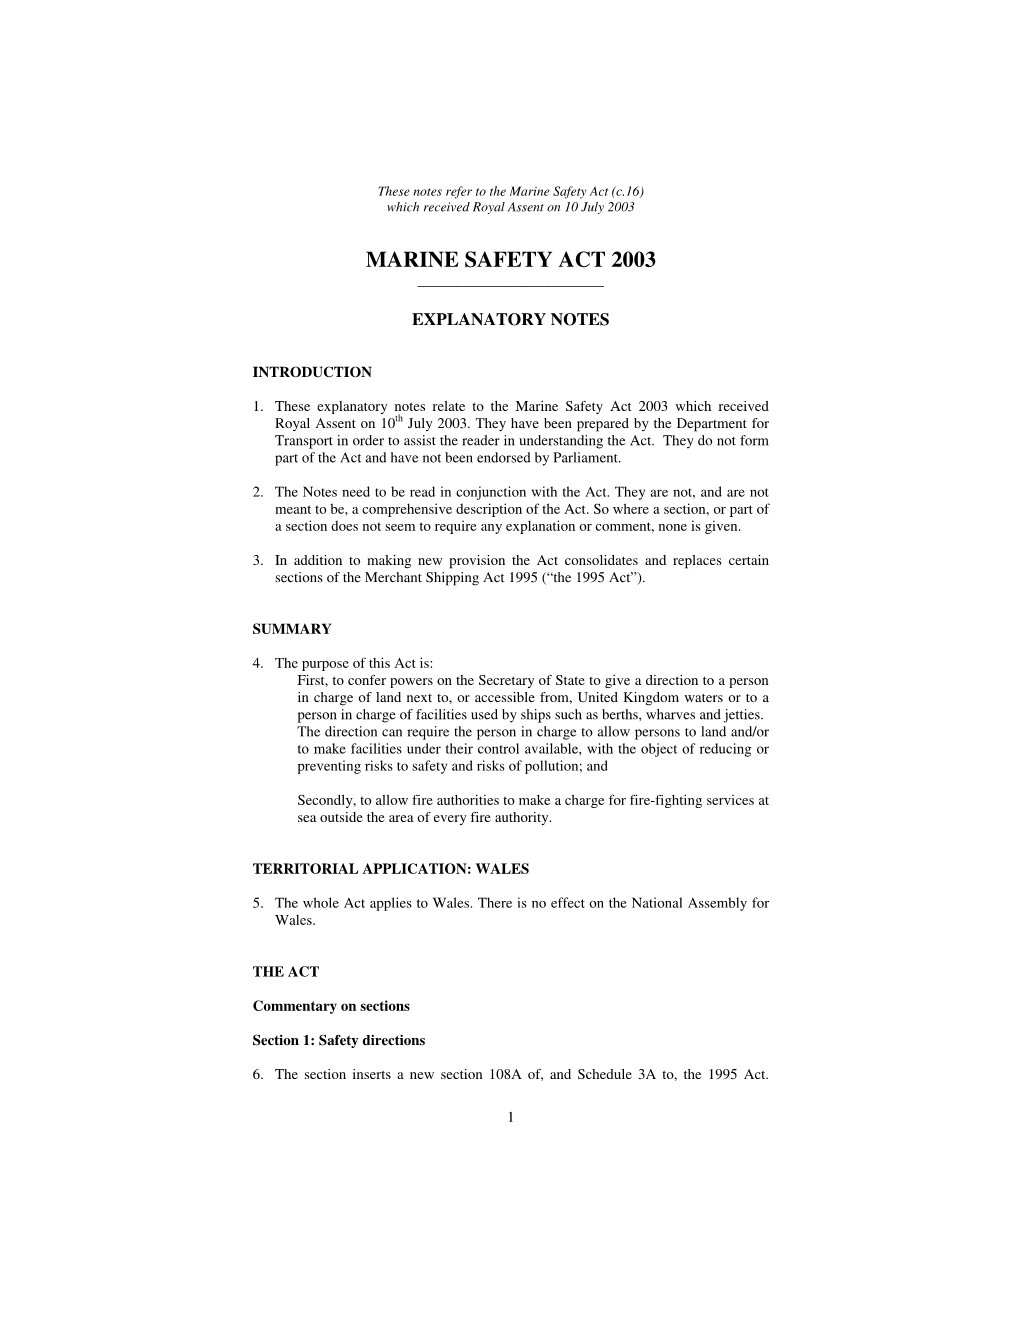 Marine Safety Act 2003 ______